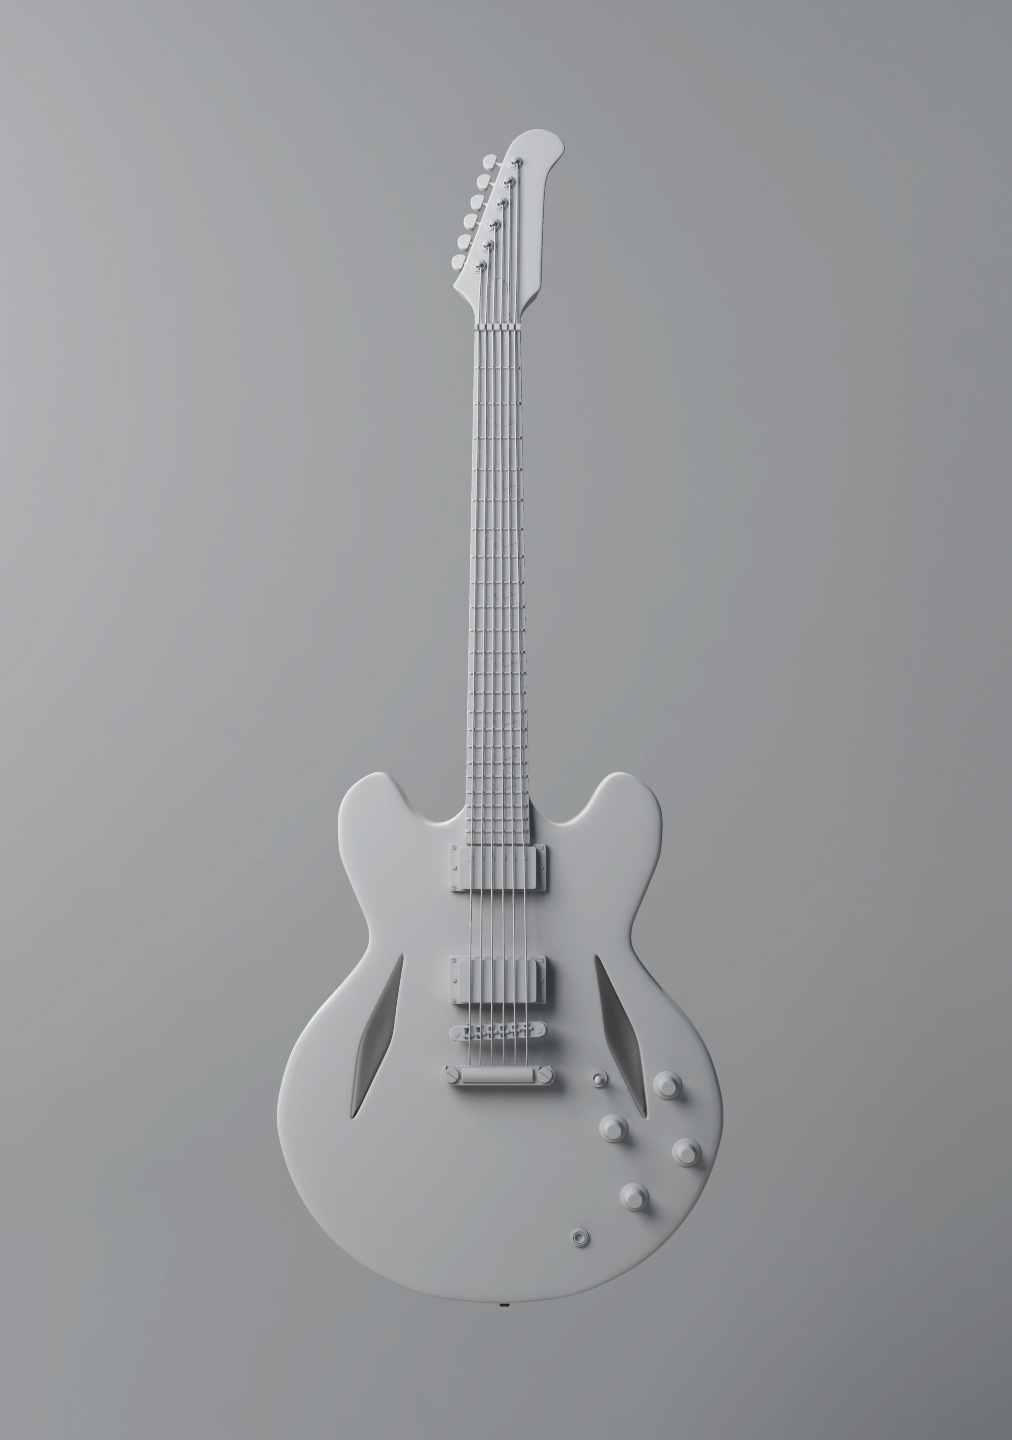 3D model Maya guitars Gibson fender brian may snakebyte kurt cobain Frankenstrat Eddie Van Halen Dave Grohl Jimi Hendrix ibanez Steve Vai Musical Instrument